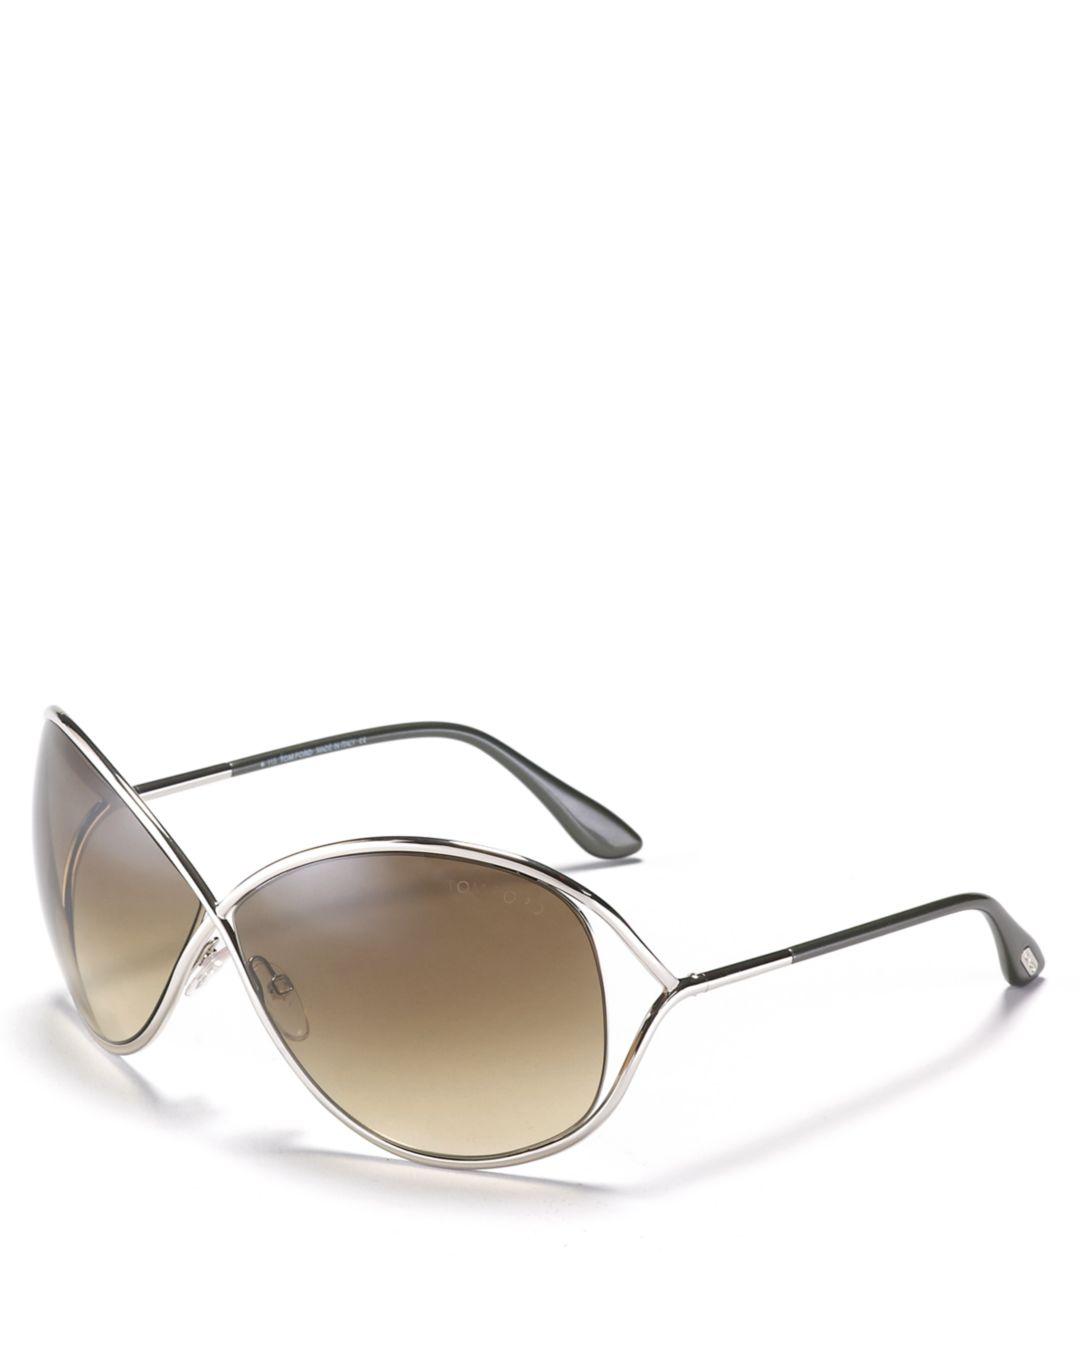 Tom Ford Women's Miranda Crossover Sunglasses in Shiny Bronze (Metallic ...